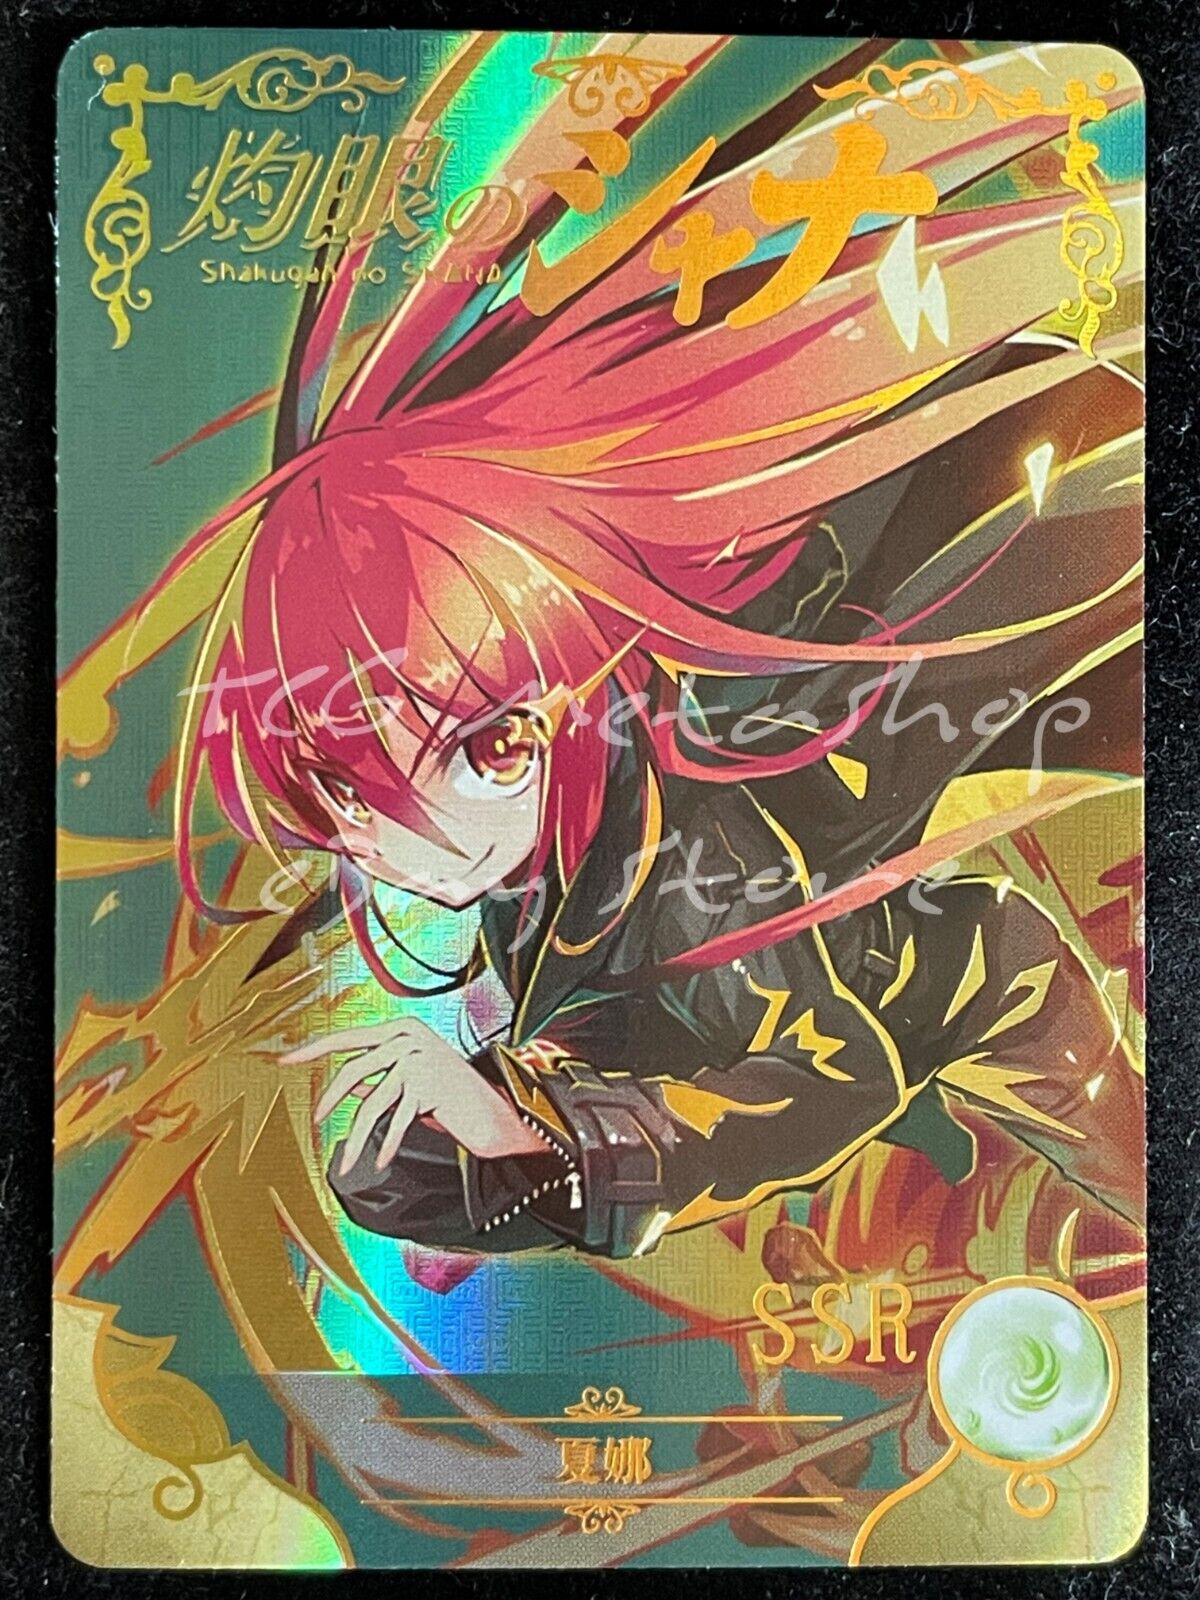 🔥 NS 02 [Pick Your Singles SSR SR] Goddess Story Waifu Anime Cards 🔥